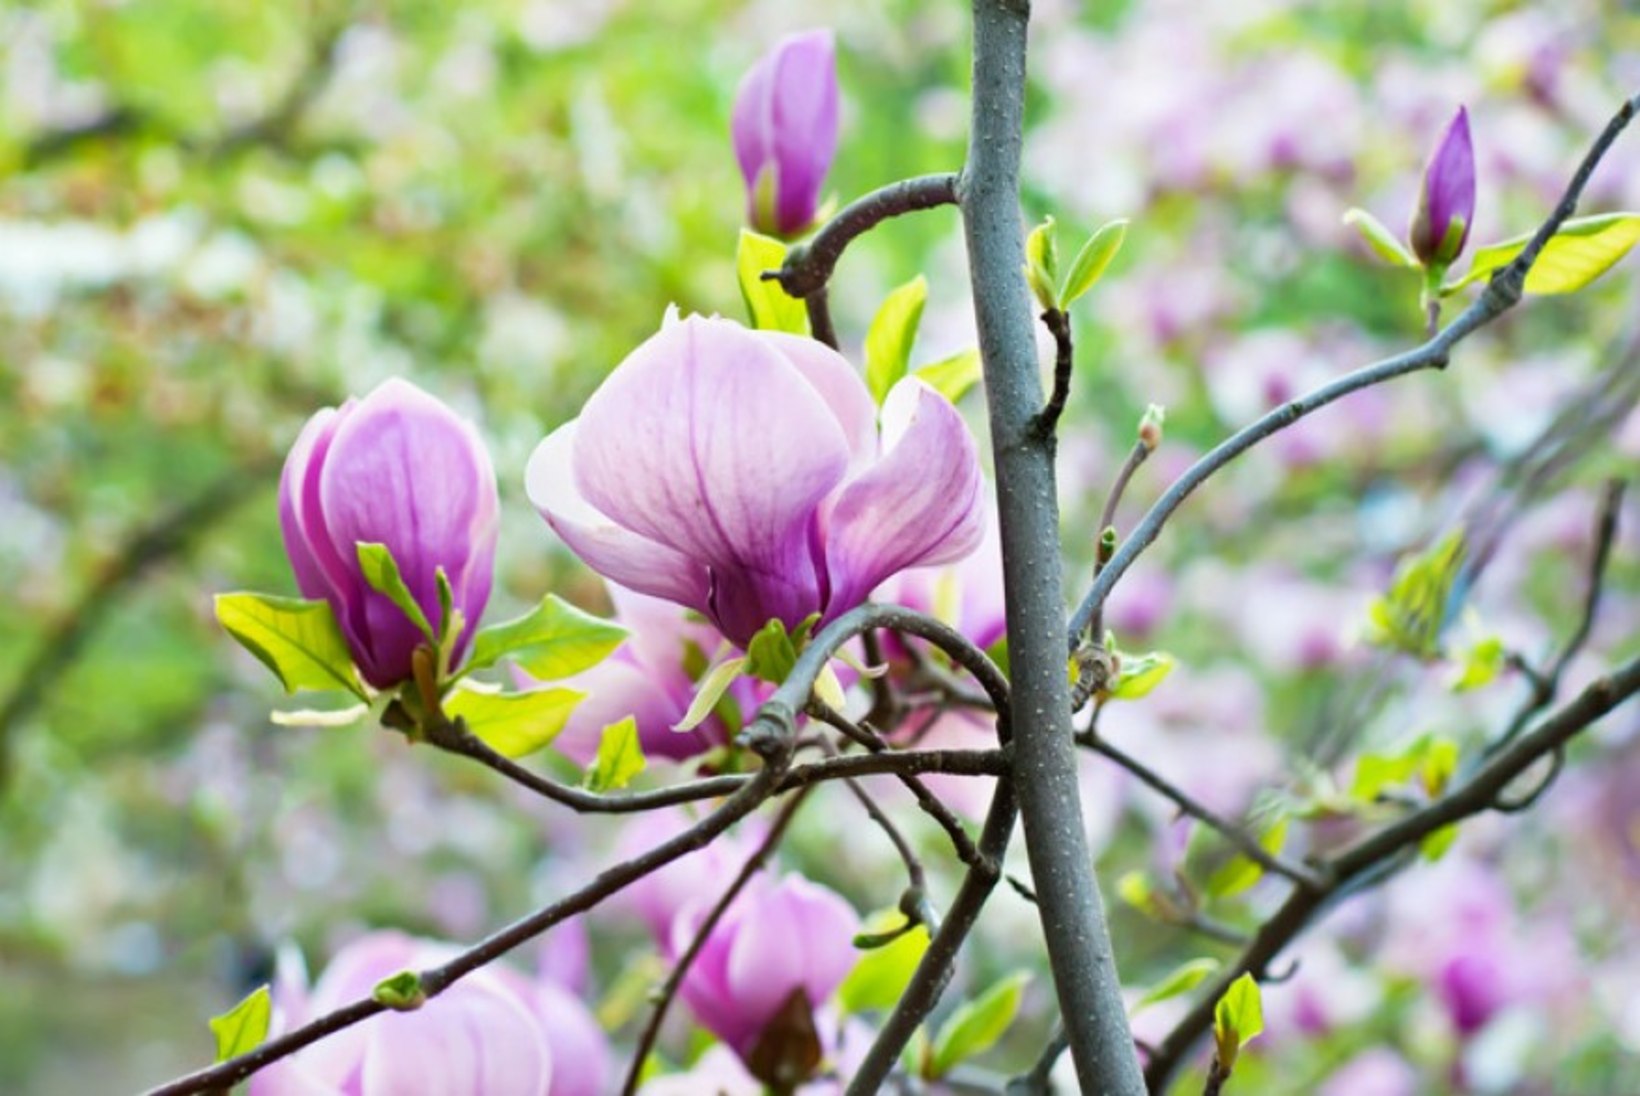 Magnoolia – ilus, aga õrn